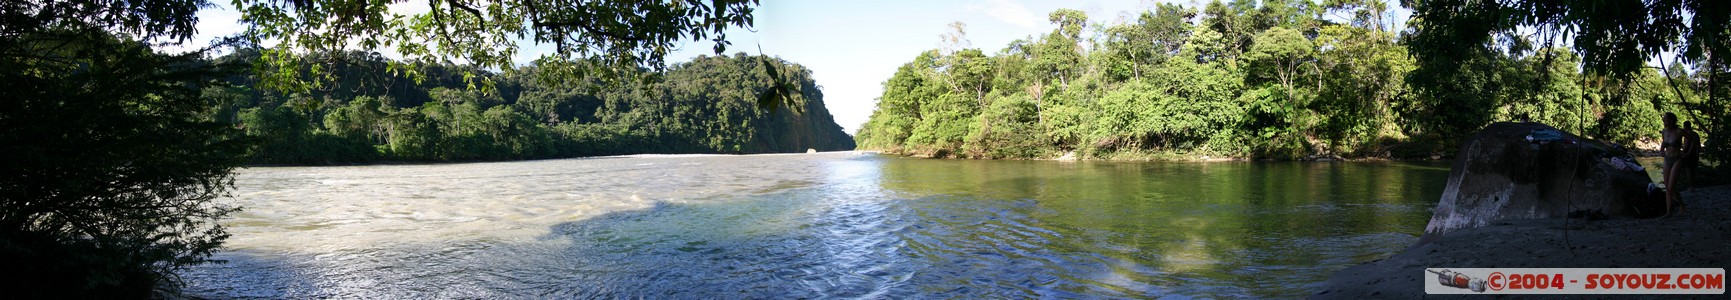 Jungle Trek - Rio Pibi - panoramique
Mots-clés: Ecuador panorama Riviere